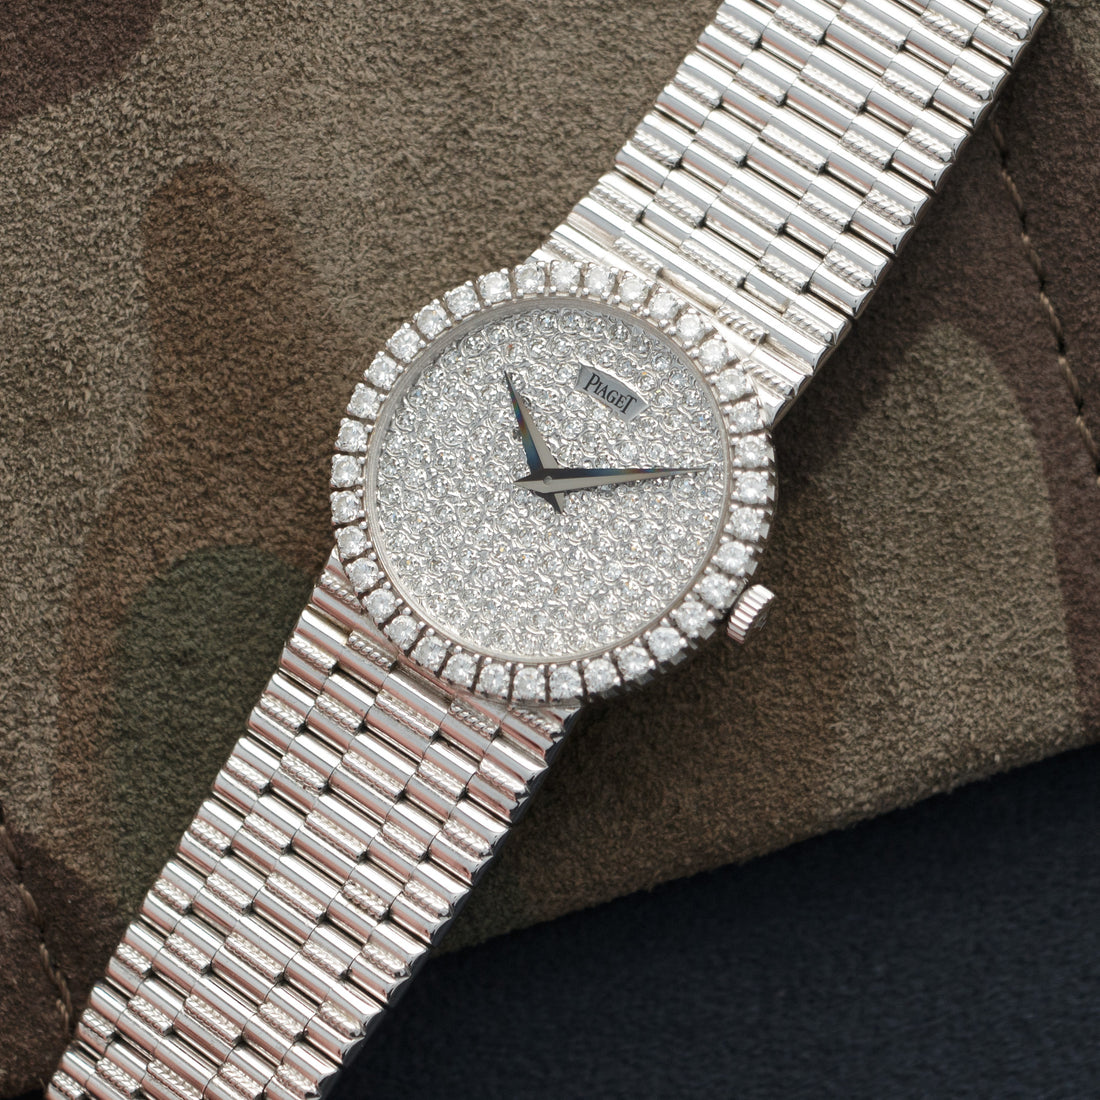 Piaget White Gold Pave Diamond Watch, Circa 1980s